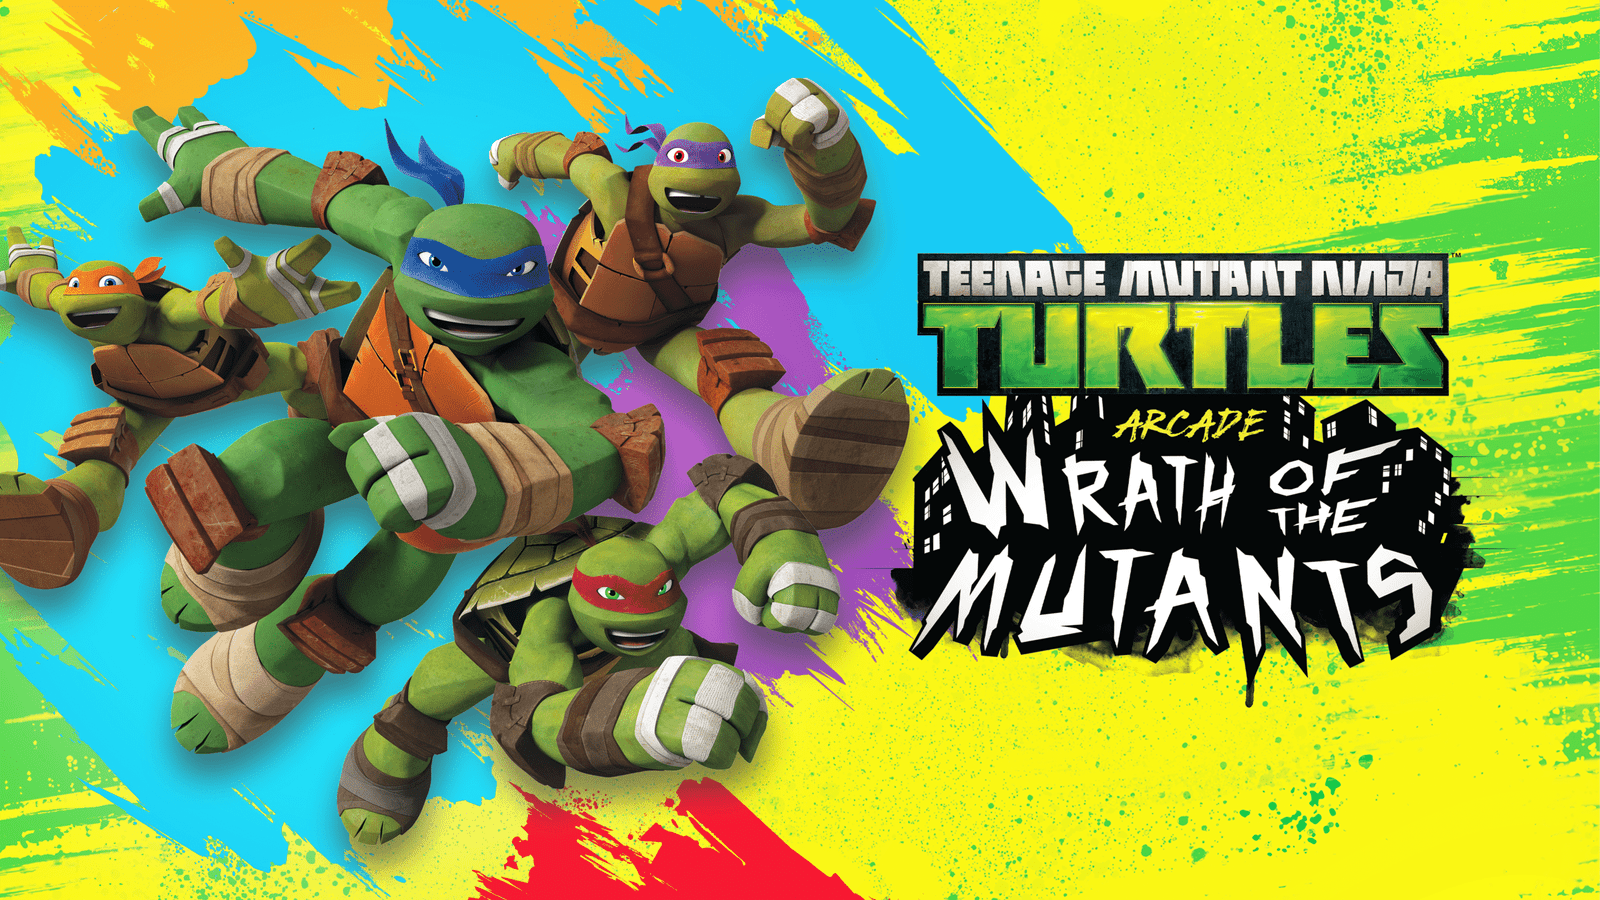 Teenage Mutant Ninja Turtles Arcade: Wrath of the Mutants – les tortues arrivent sur Nintendo Switch en avril !